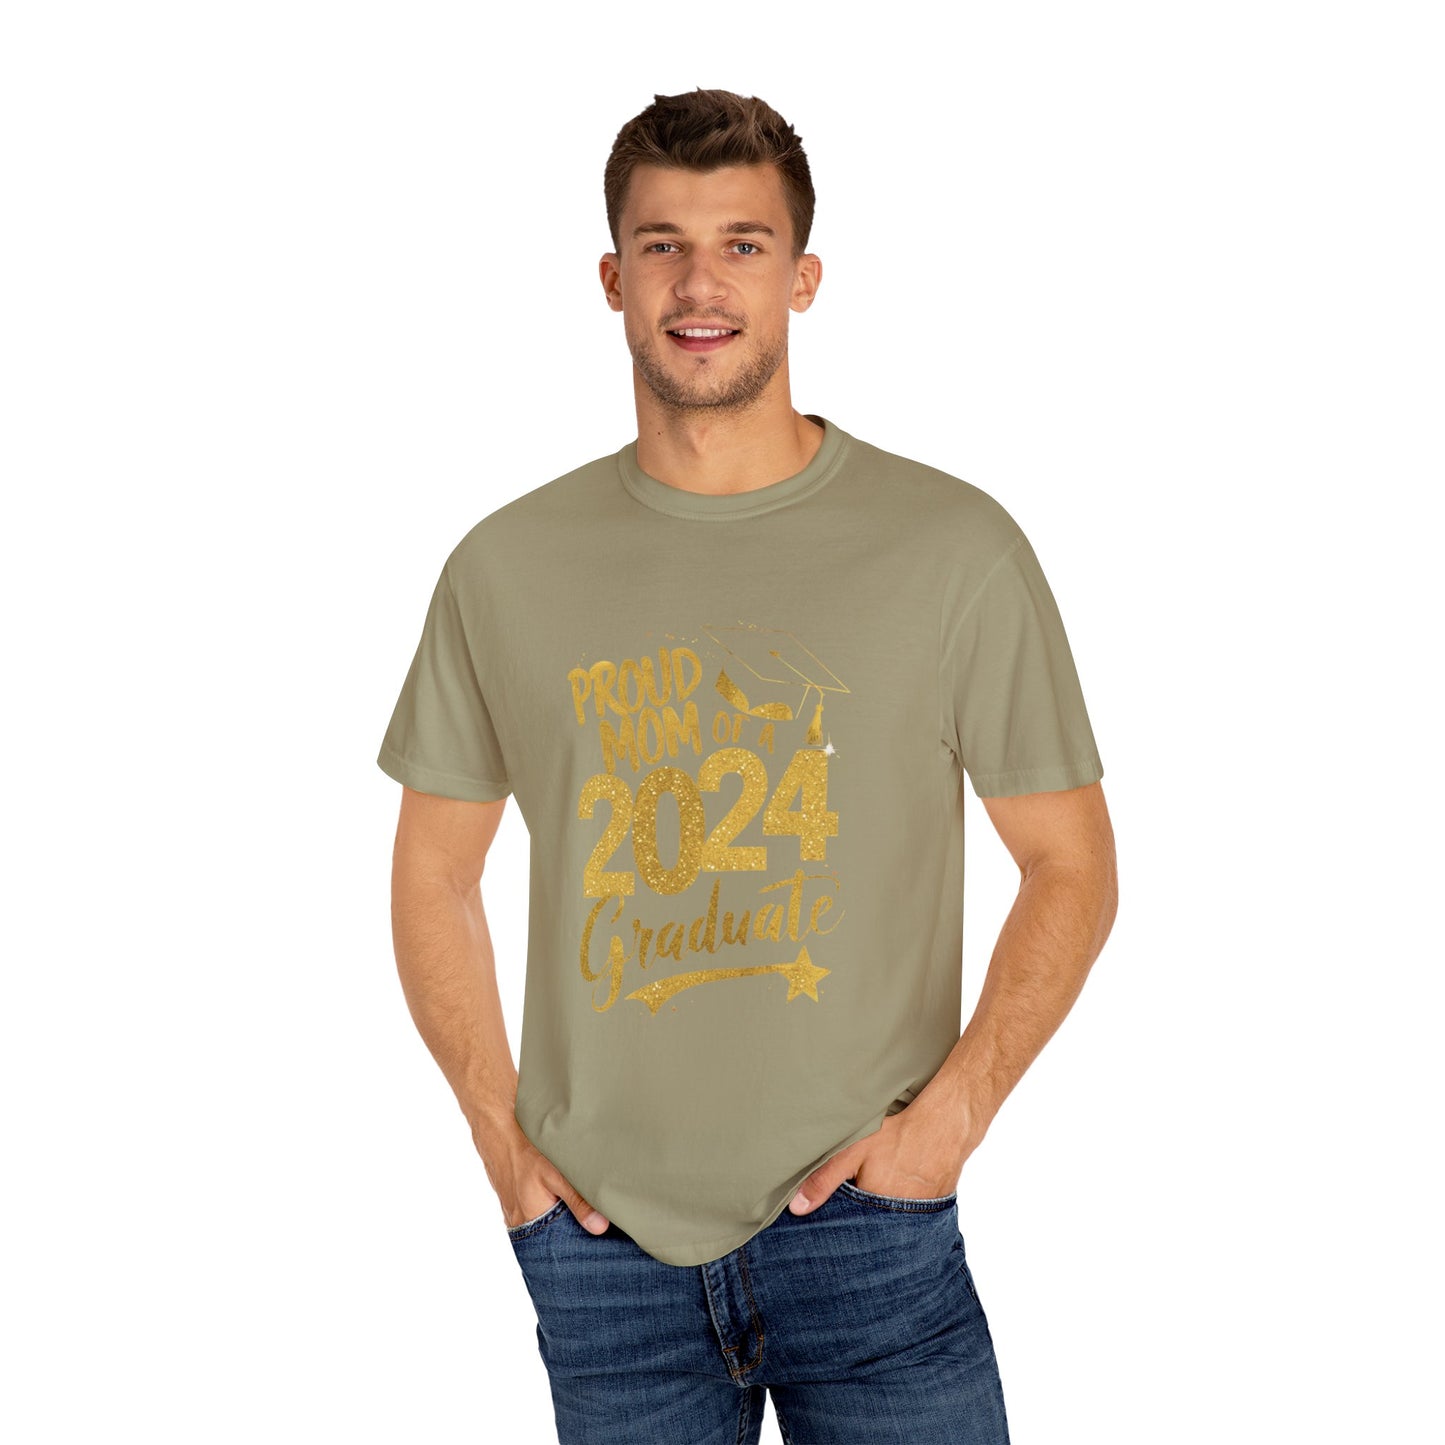 Proud of Mom 2024 Graduate Unisex Garment-dyed T-shirt Cotton Funny Humorous Graphic Soft Premium Unisex Men Women Khaki T-shirt Birthday Gift-48